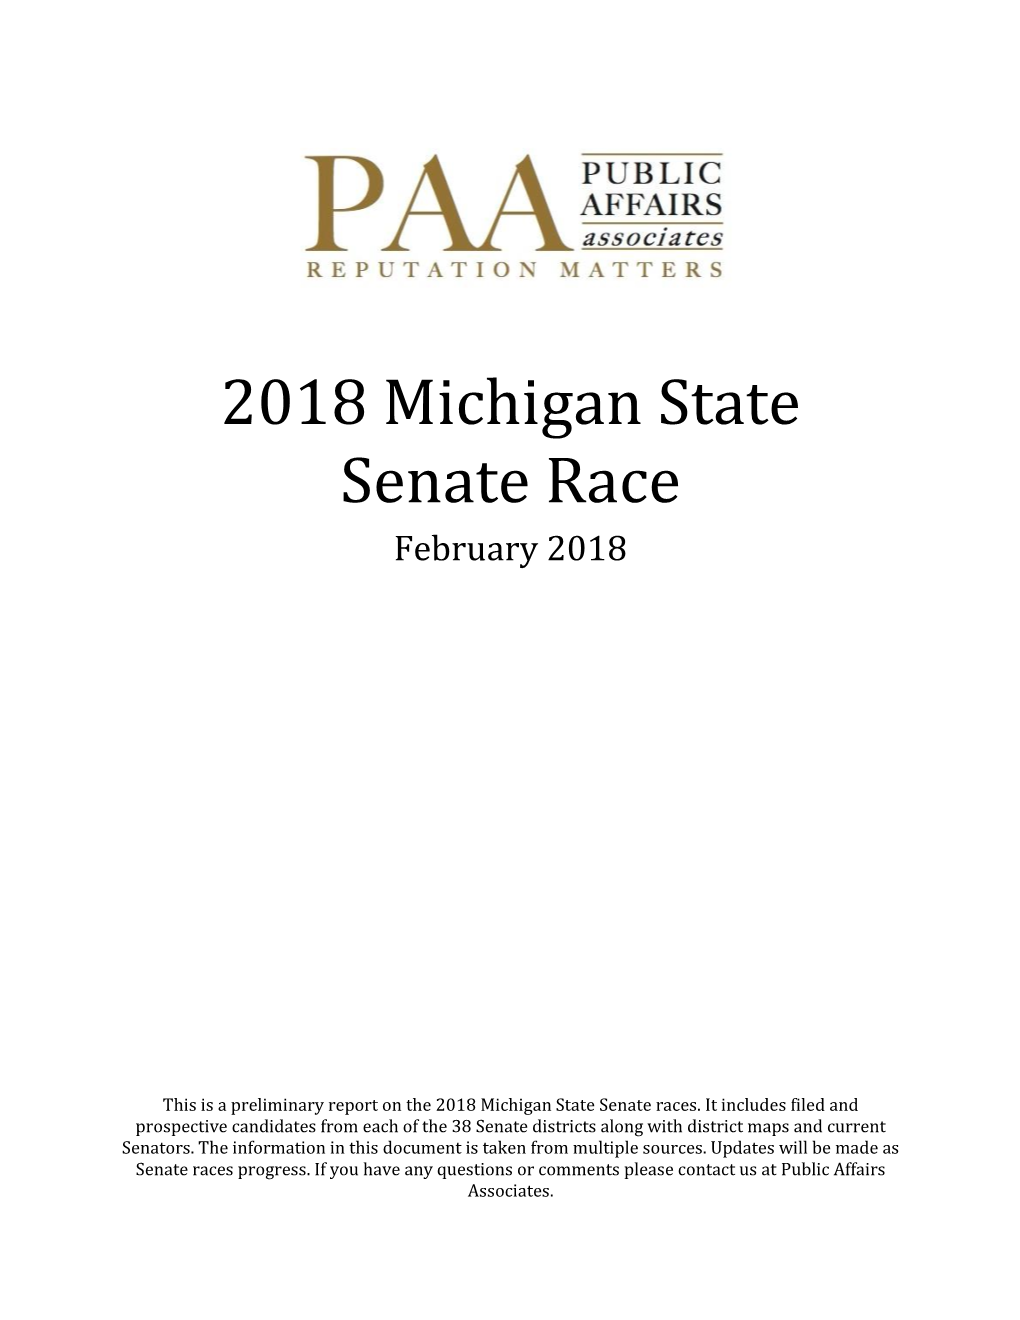 2018 Michigan State Senate Race February 2018